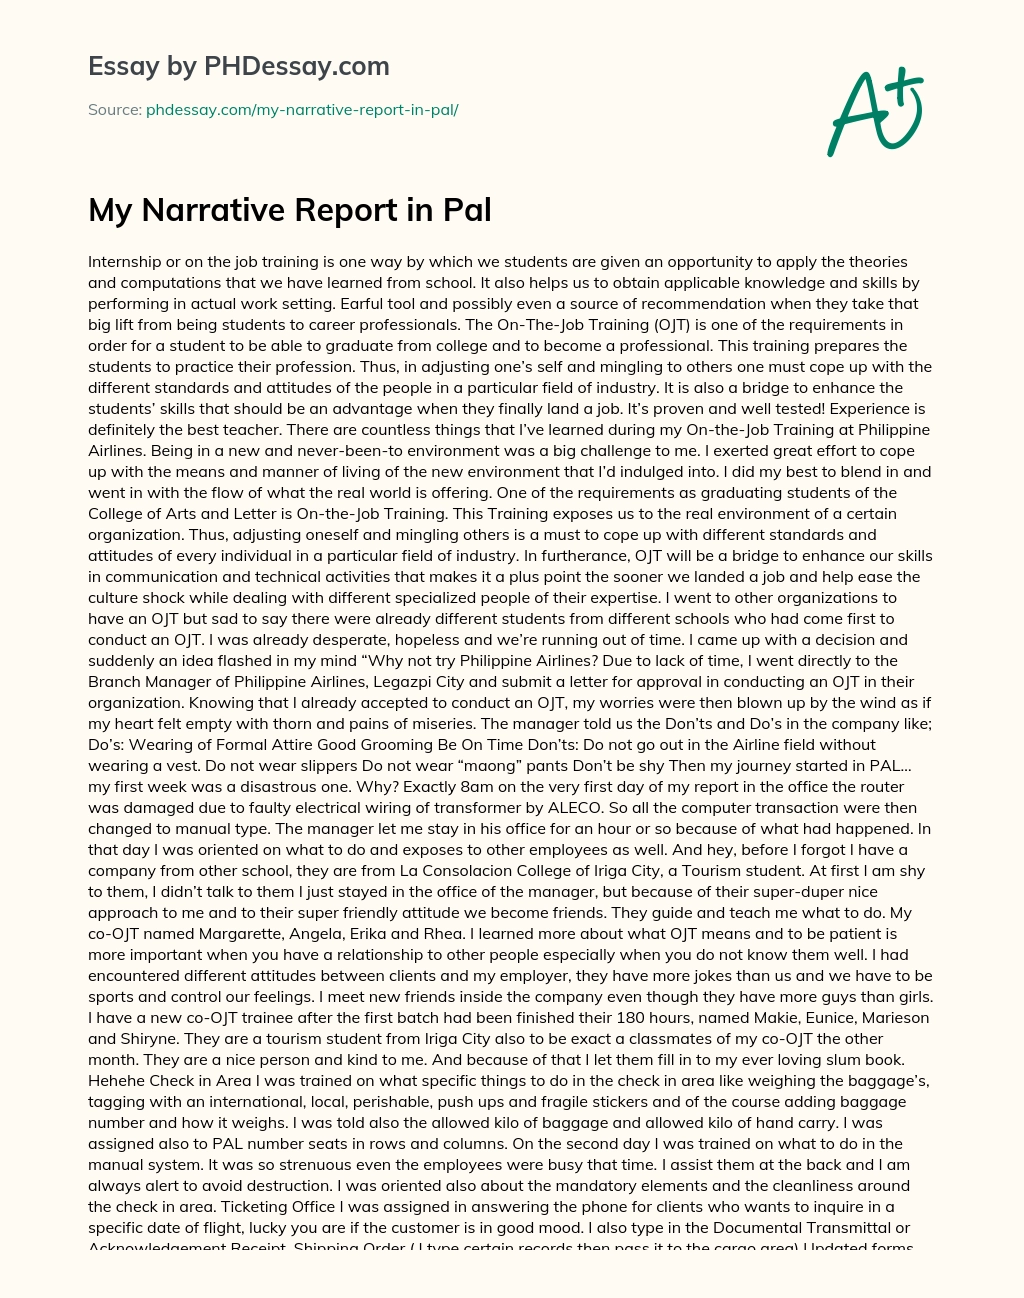 My Narrative Report in Pal essay